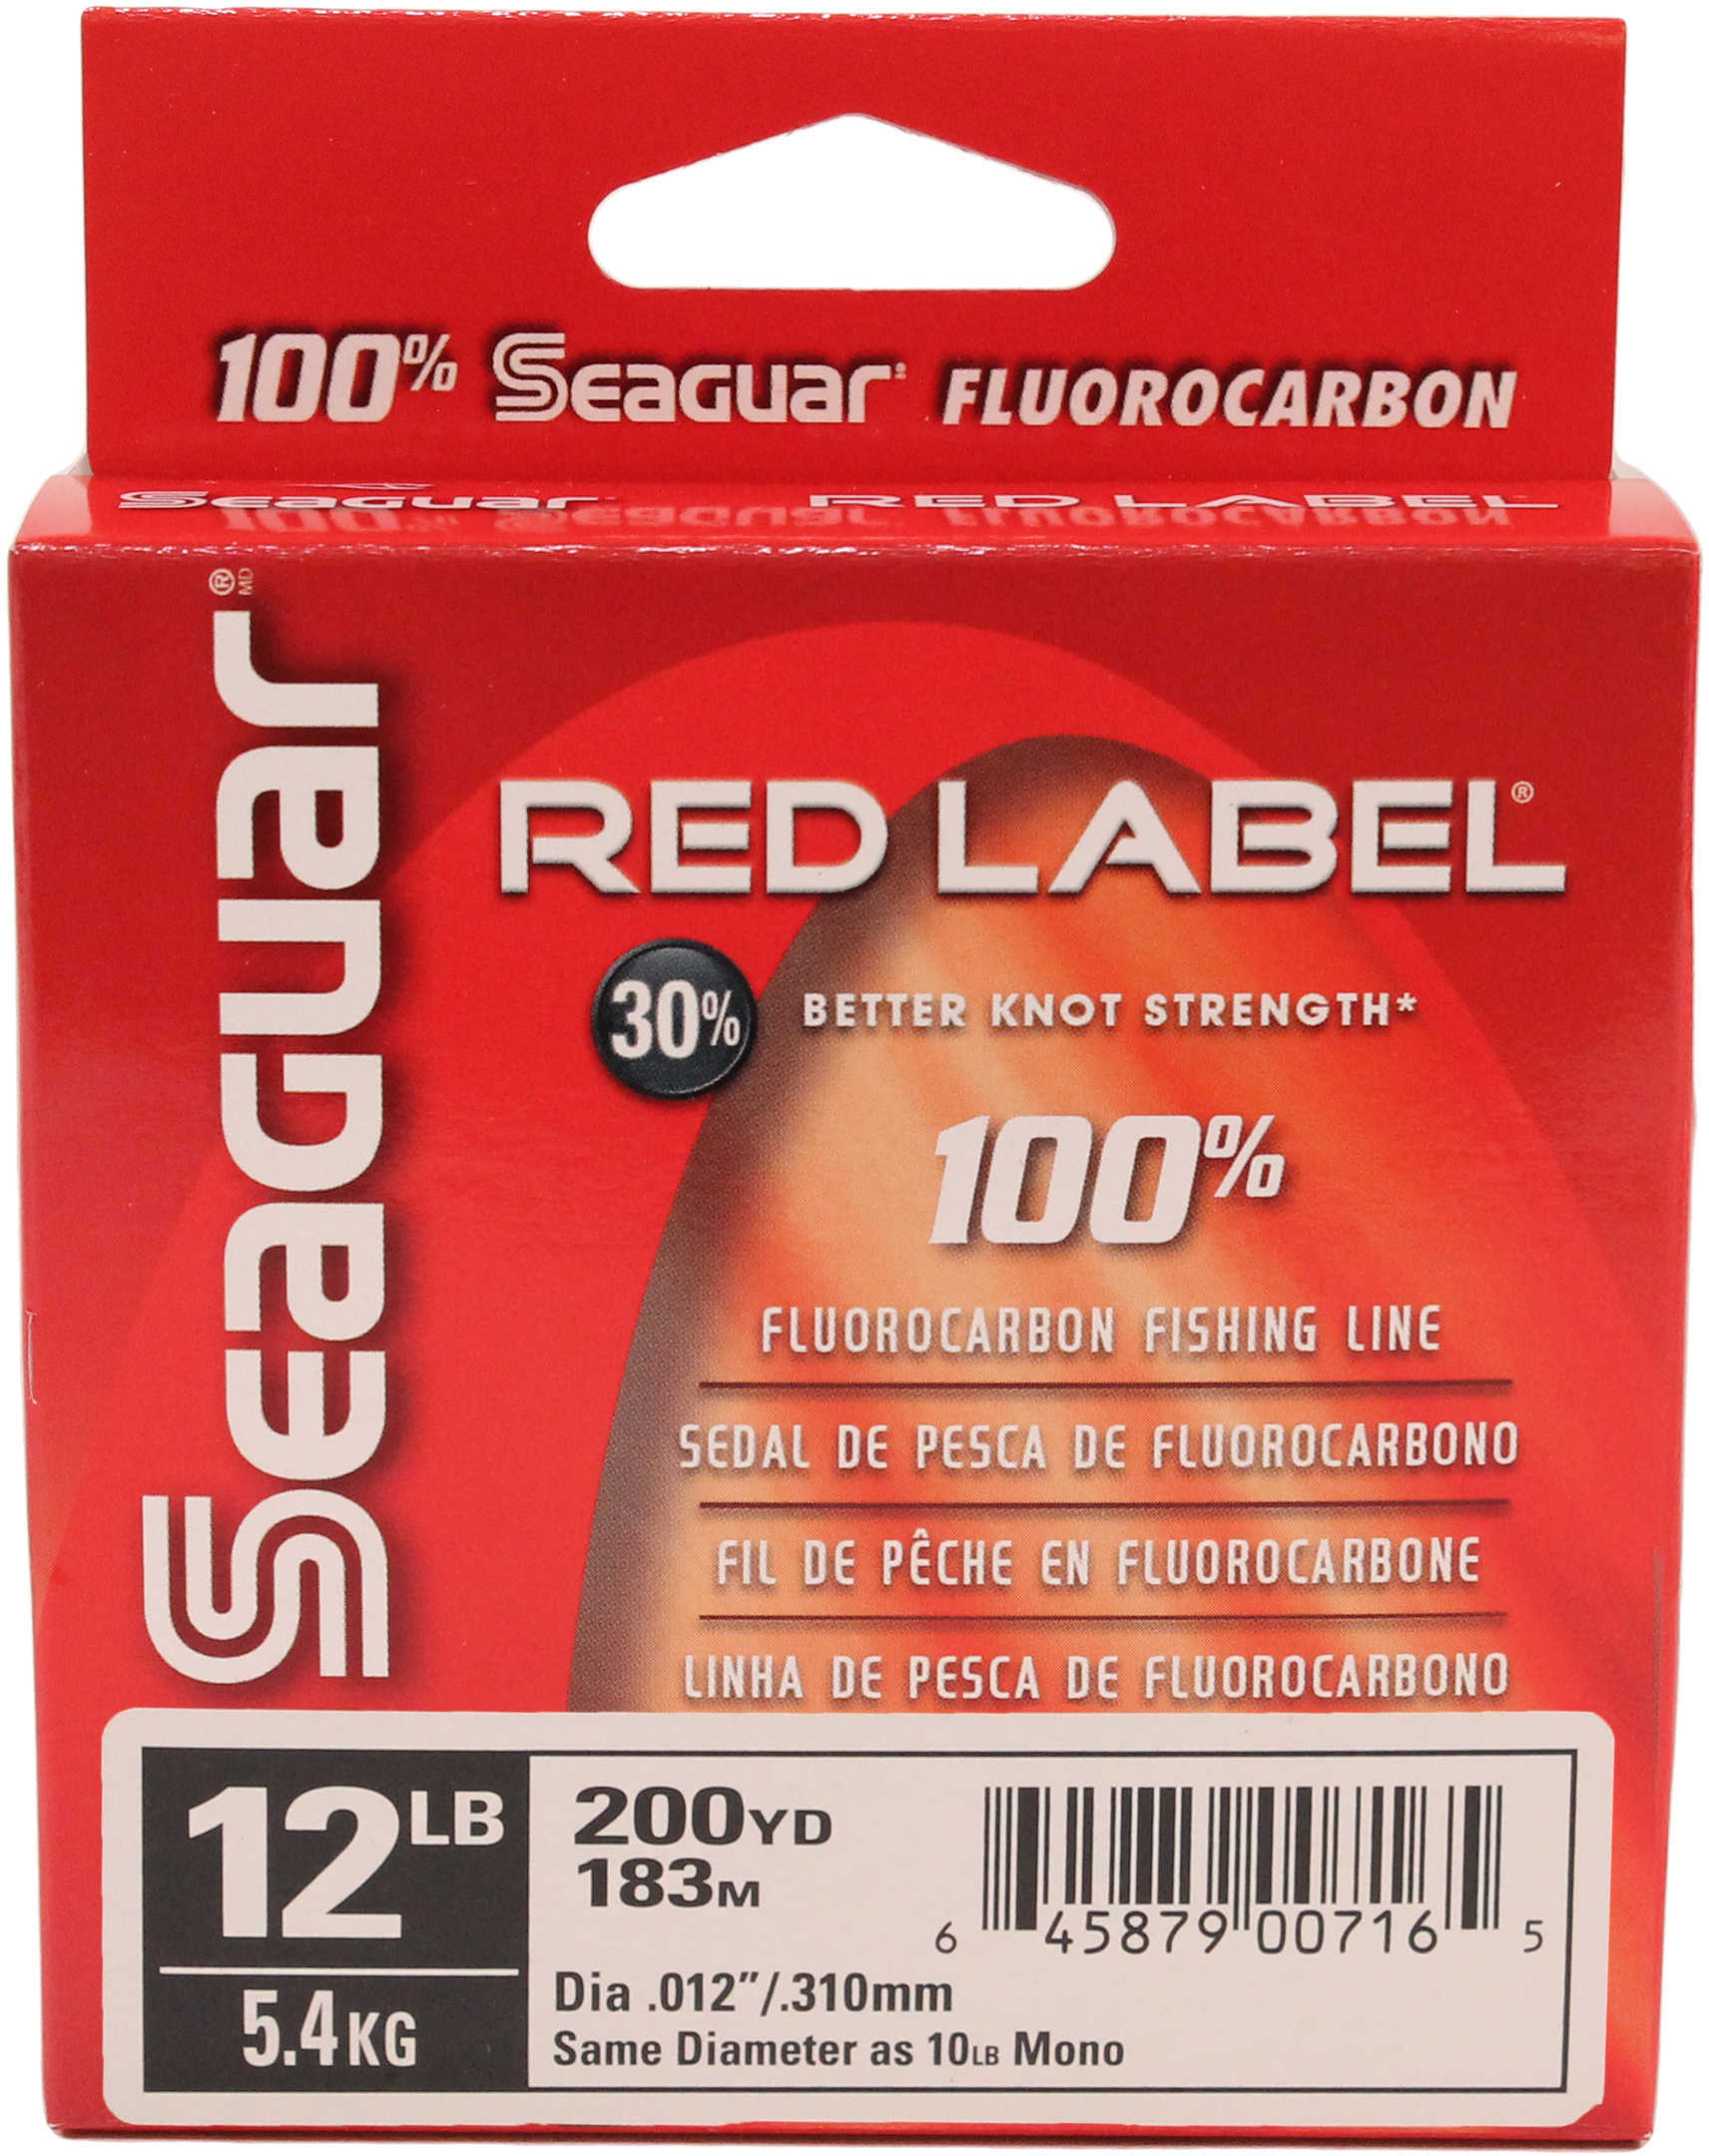 Seaguar Red Label Fluorcarbon Clear 200yds 12Lb Md#: 12Rm-200